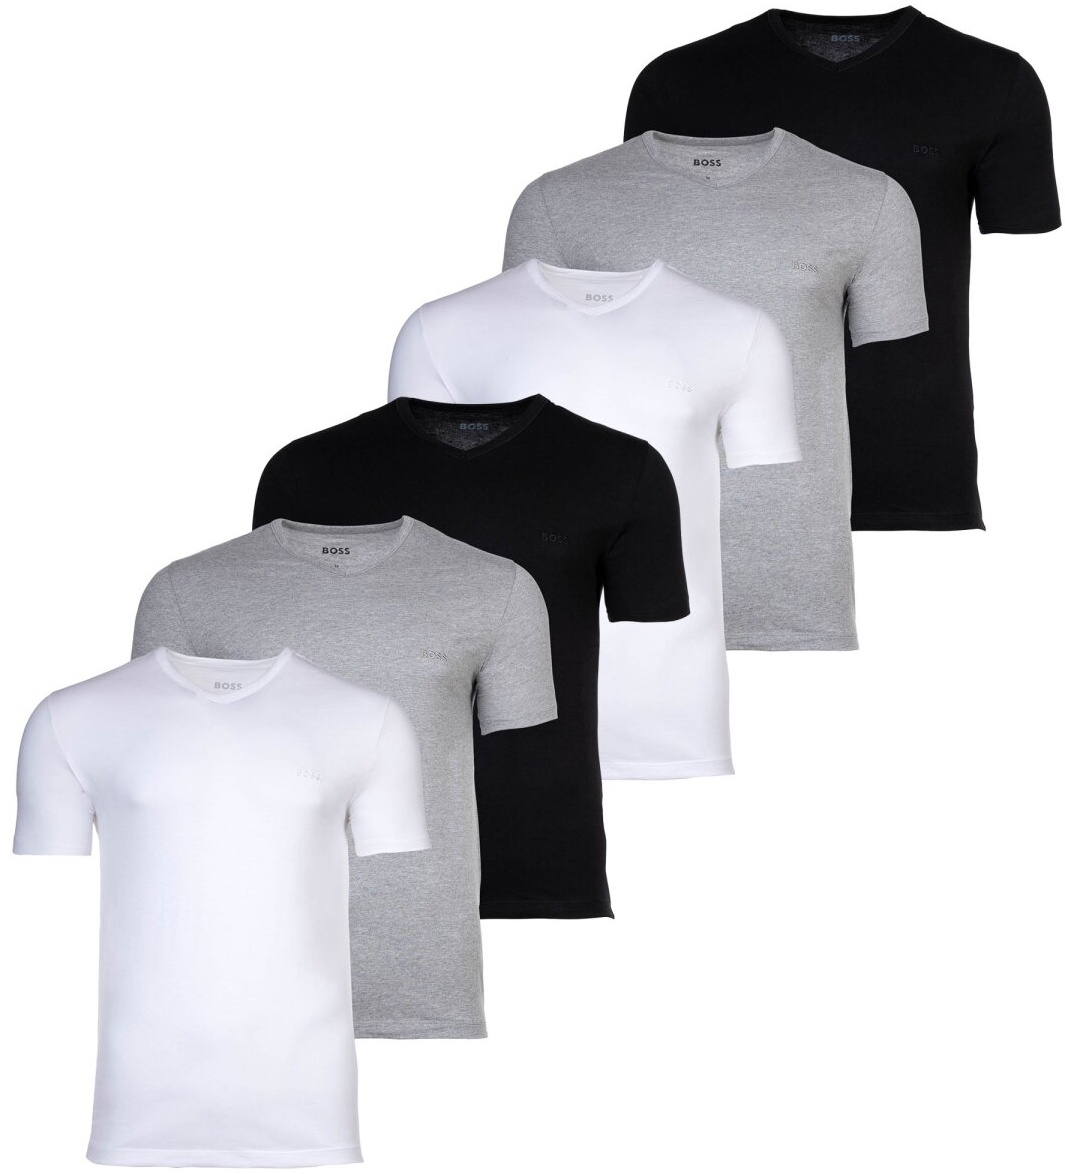 BOSS Herren T-Shirt, 6er Pack - TShirtVN Classic, Unterhemd, V-Neck, Cotton Weiß/Grau/Schwarz S